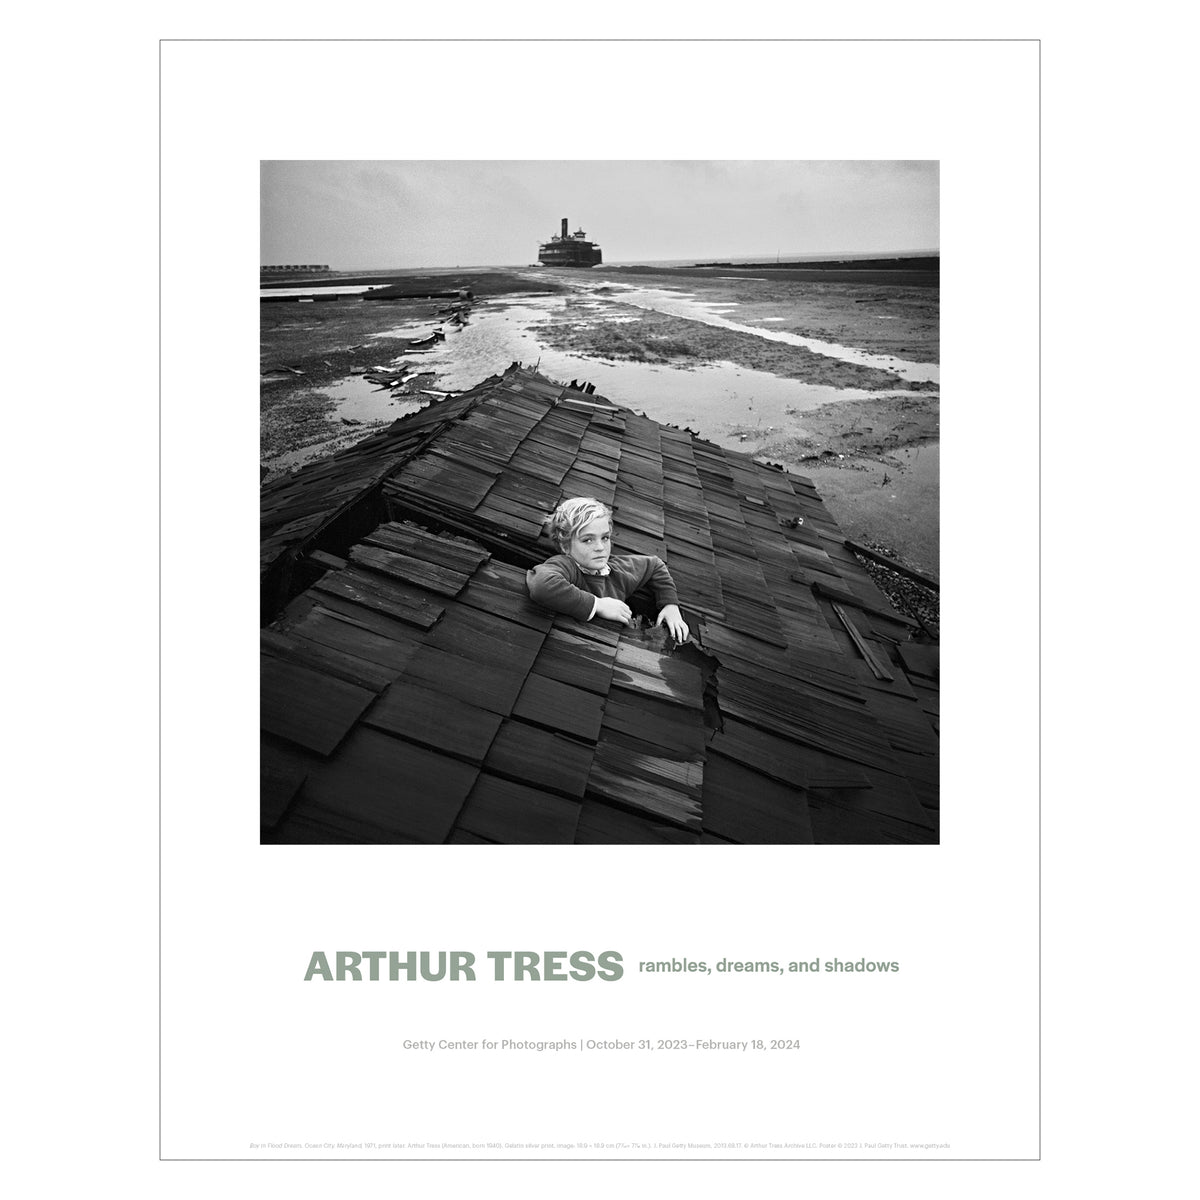 Arthur Tress: Rambles, Dreams, and Shadows Exhibition Poster